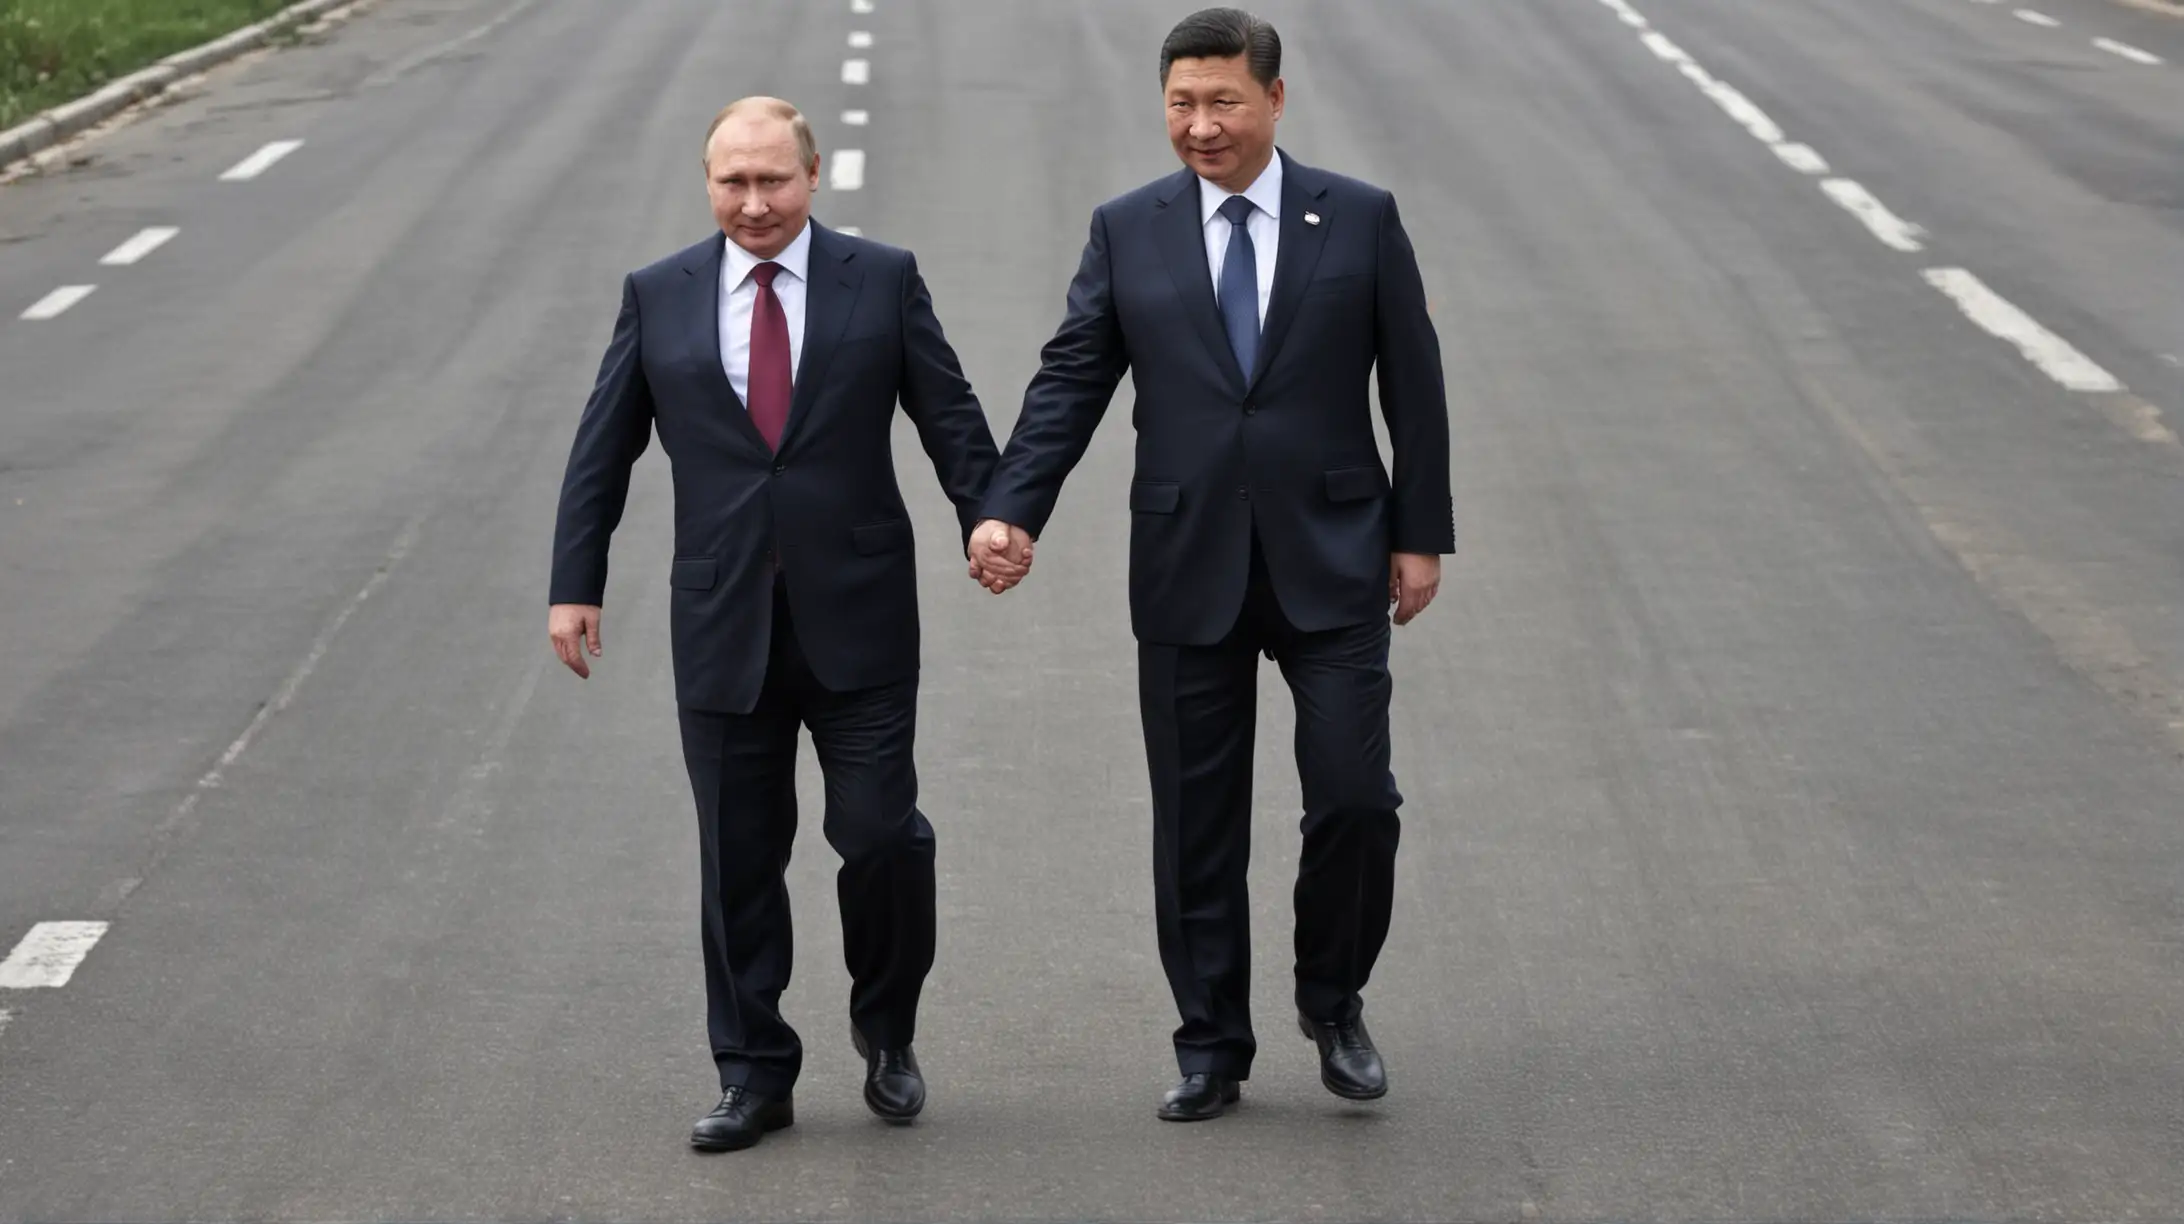 Chinese President Xi Jinping Walking with DwarfLike Russian President Vladimir Putin on Road